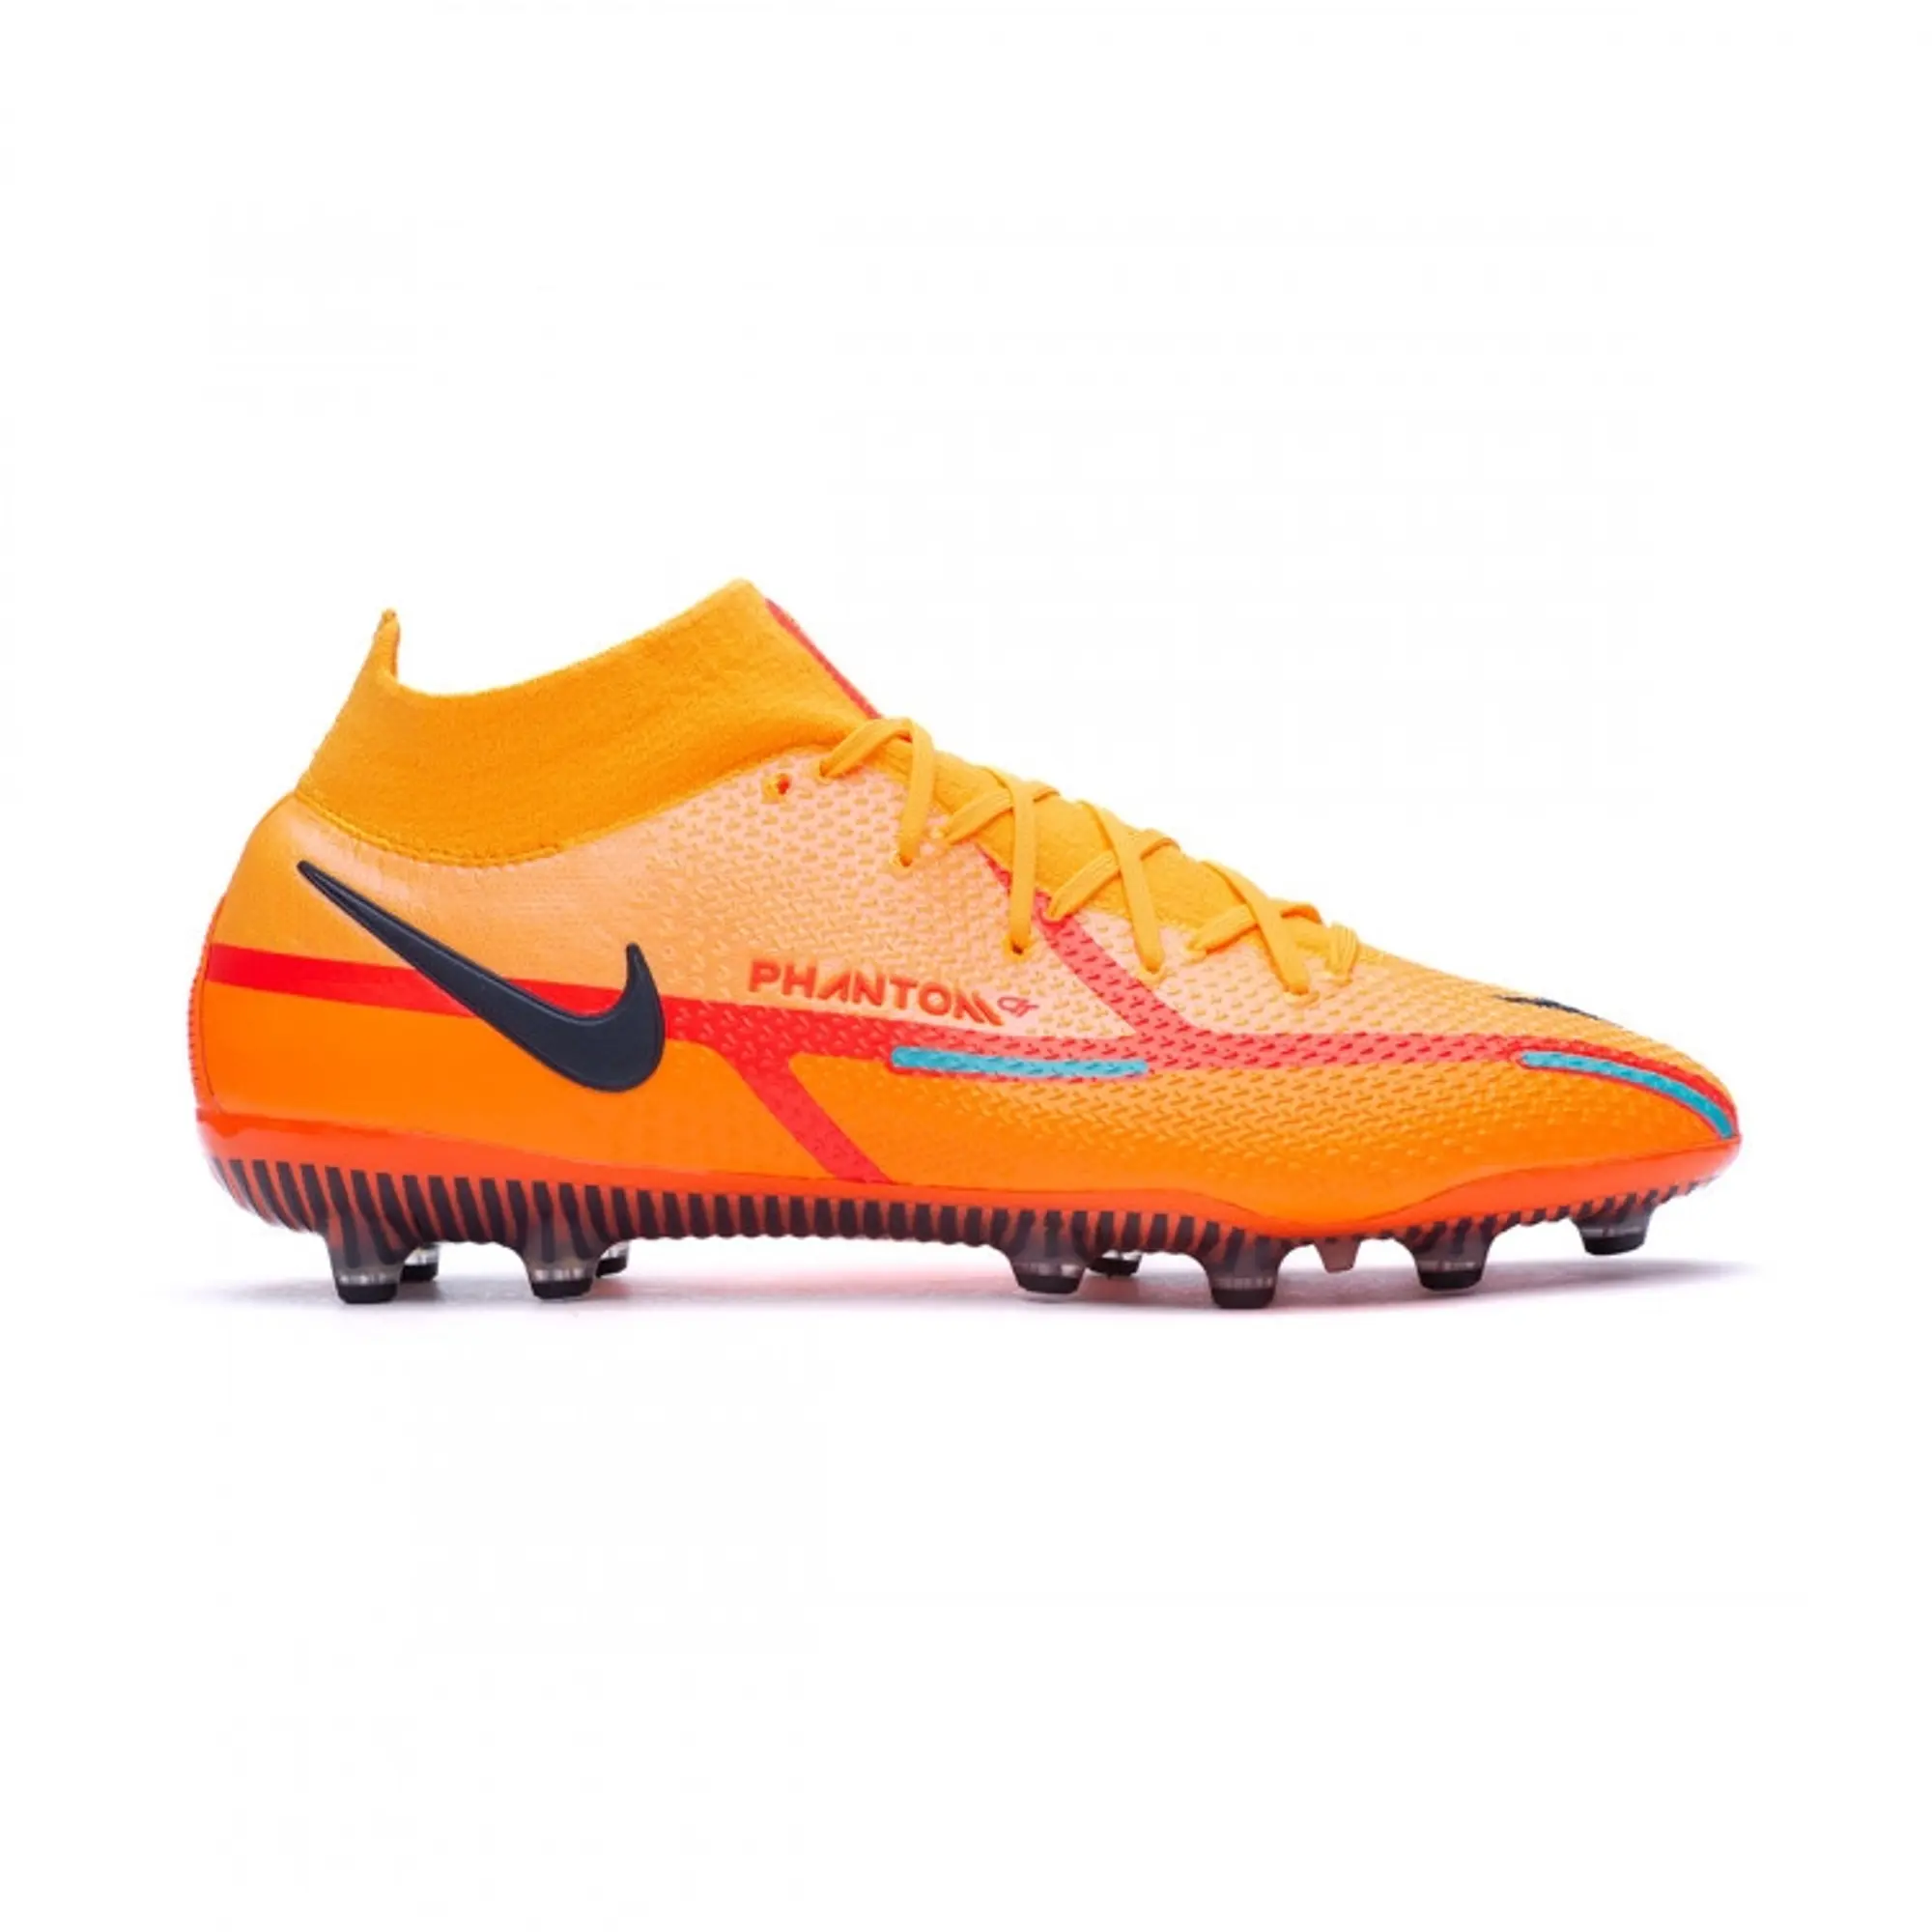 Emoción Indiferencia sentido común Orange Nike Football Boots | FOOTY.COM